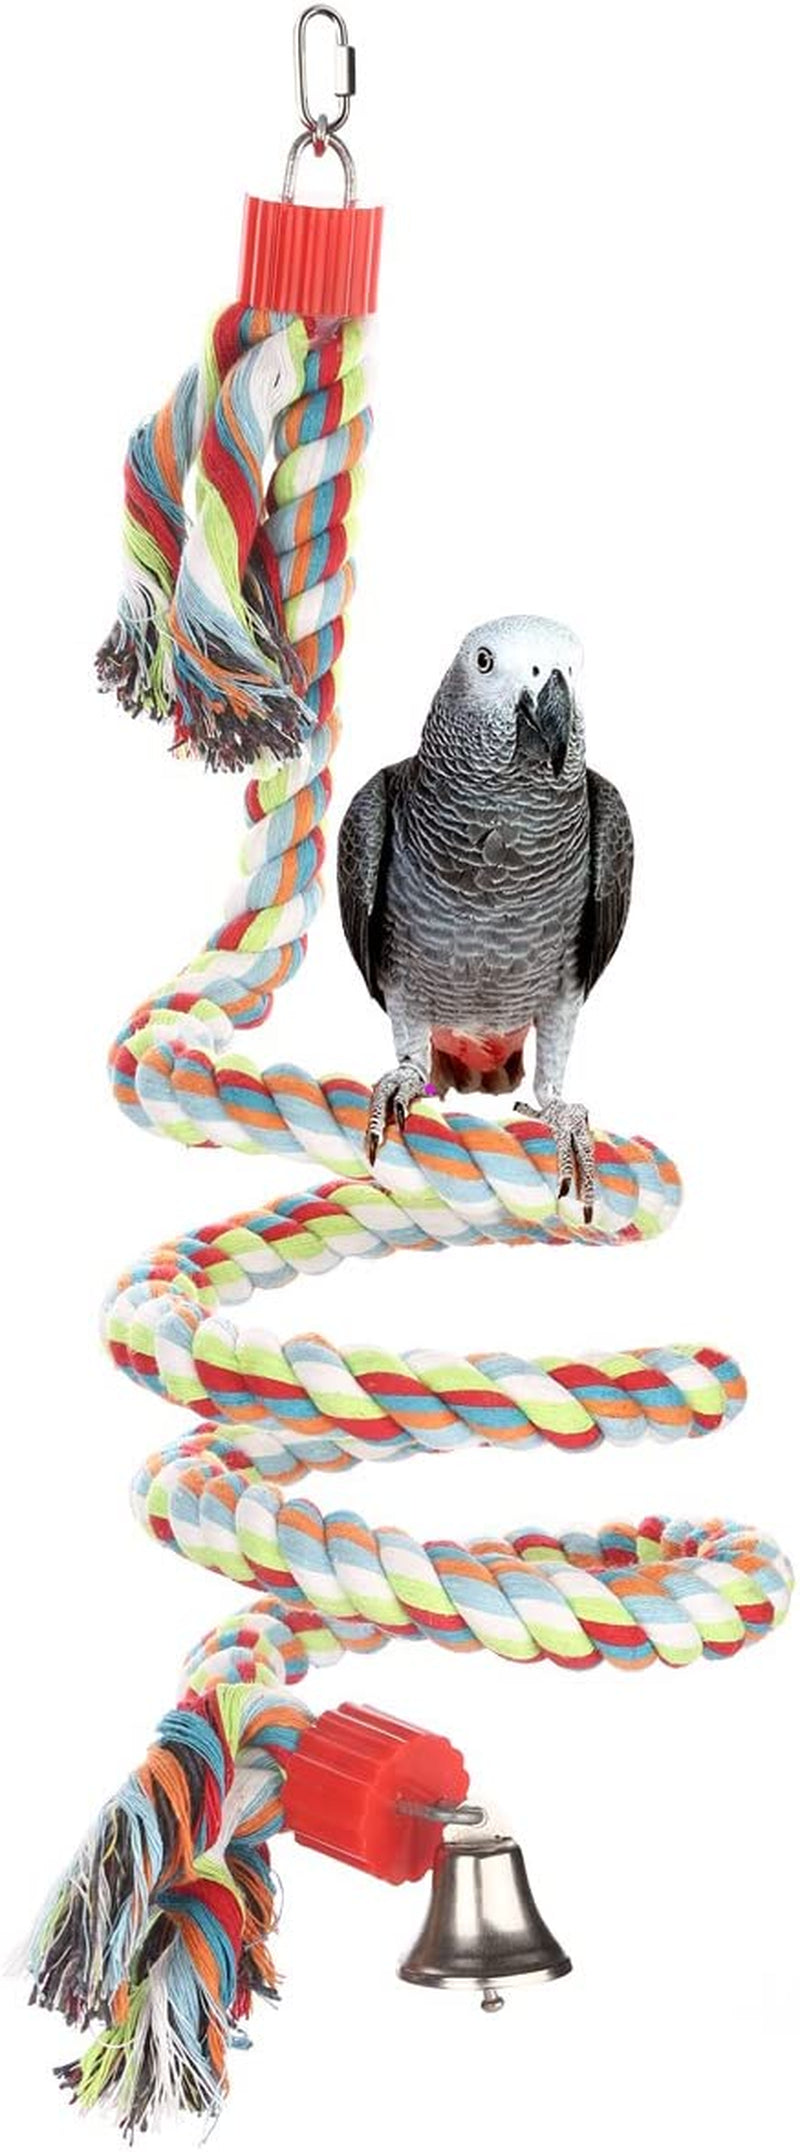 Jusney Bird Perch, Large Parrot Toys 63 Inch Climbing Rope Bungee Bird Toys